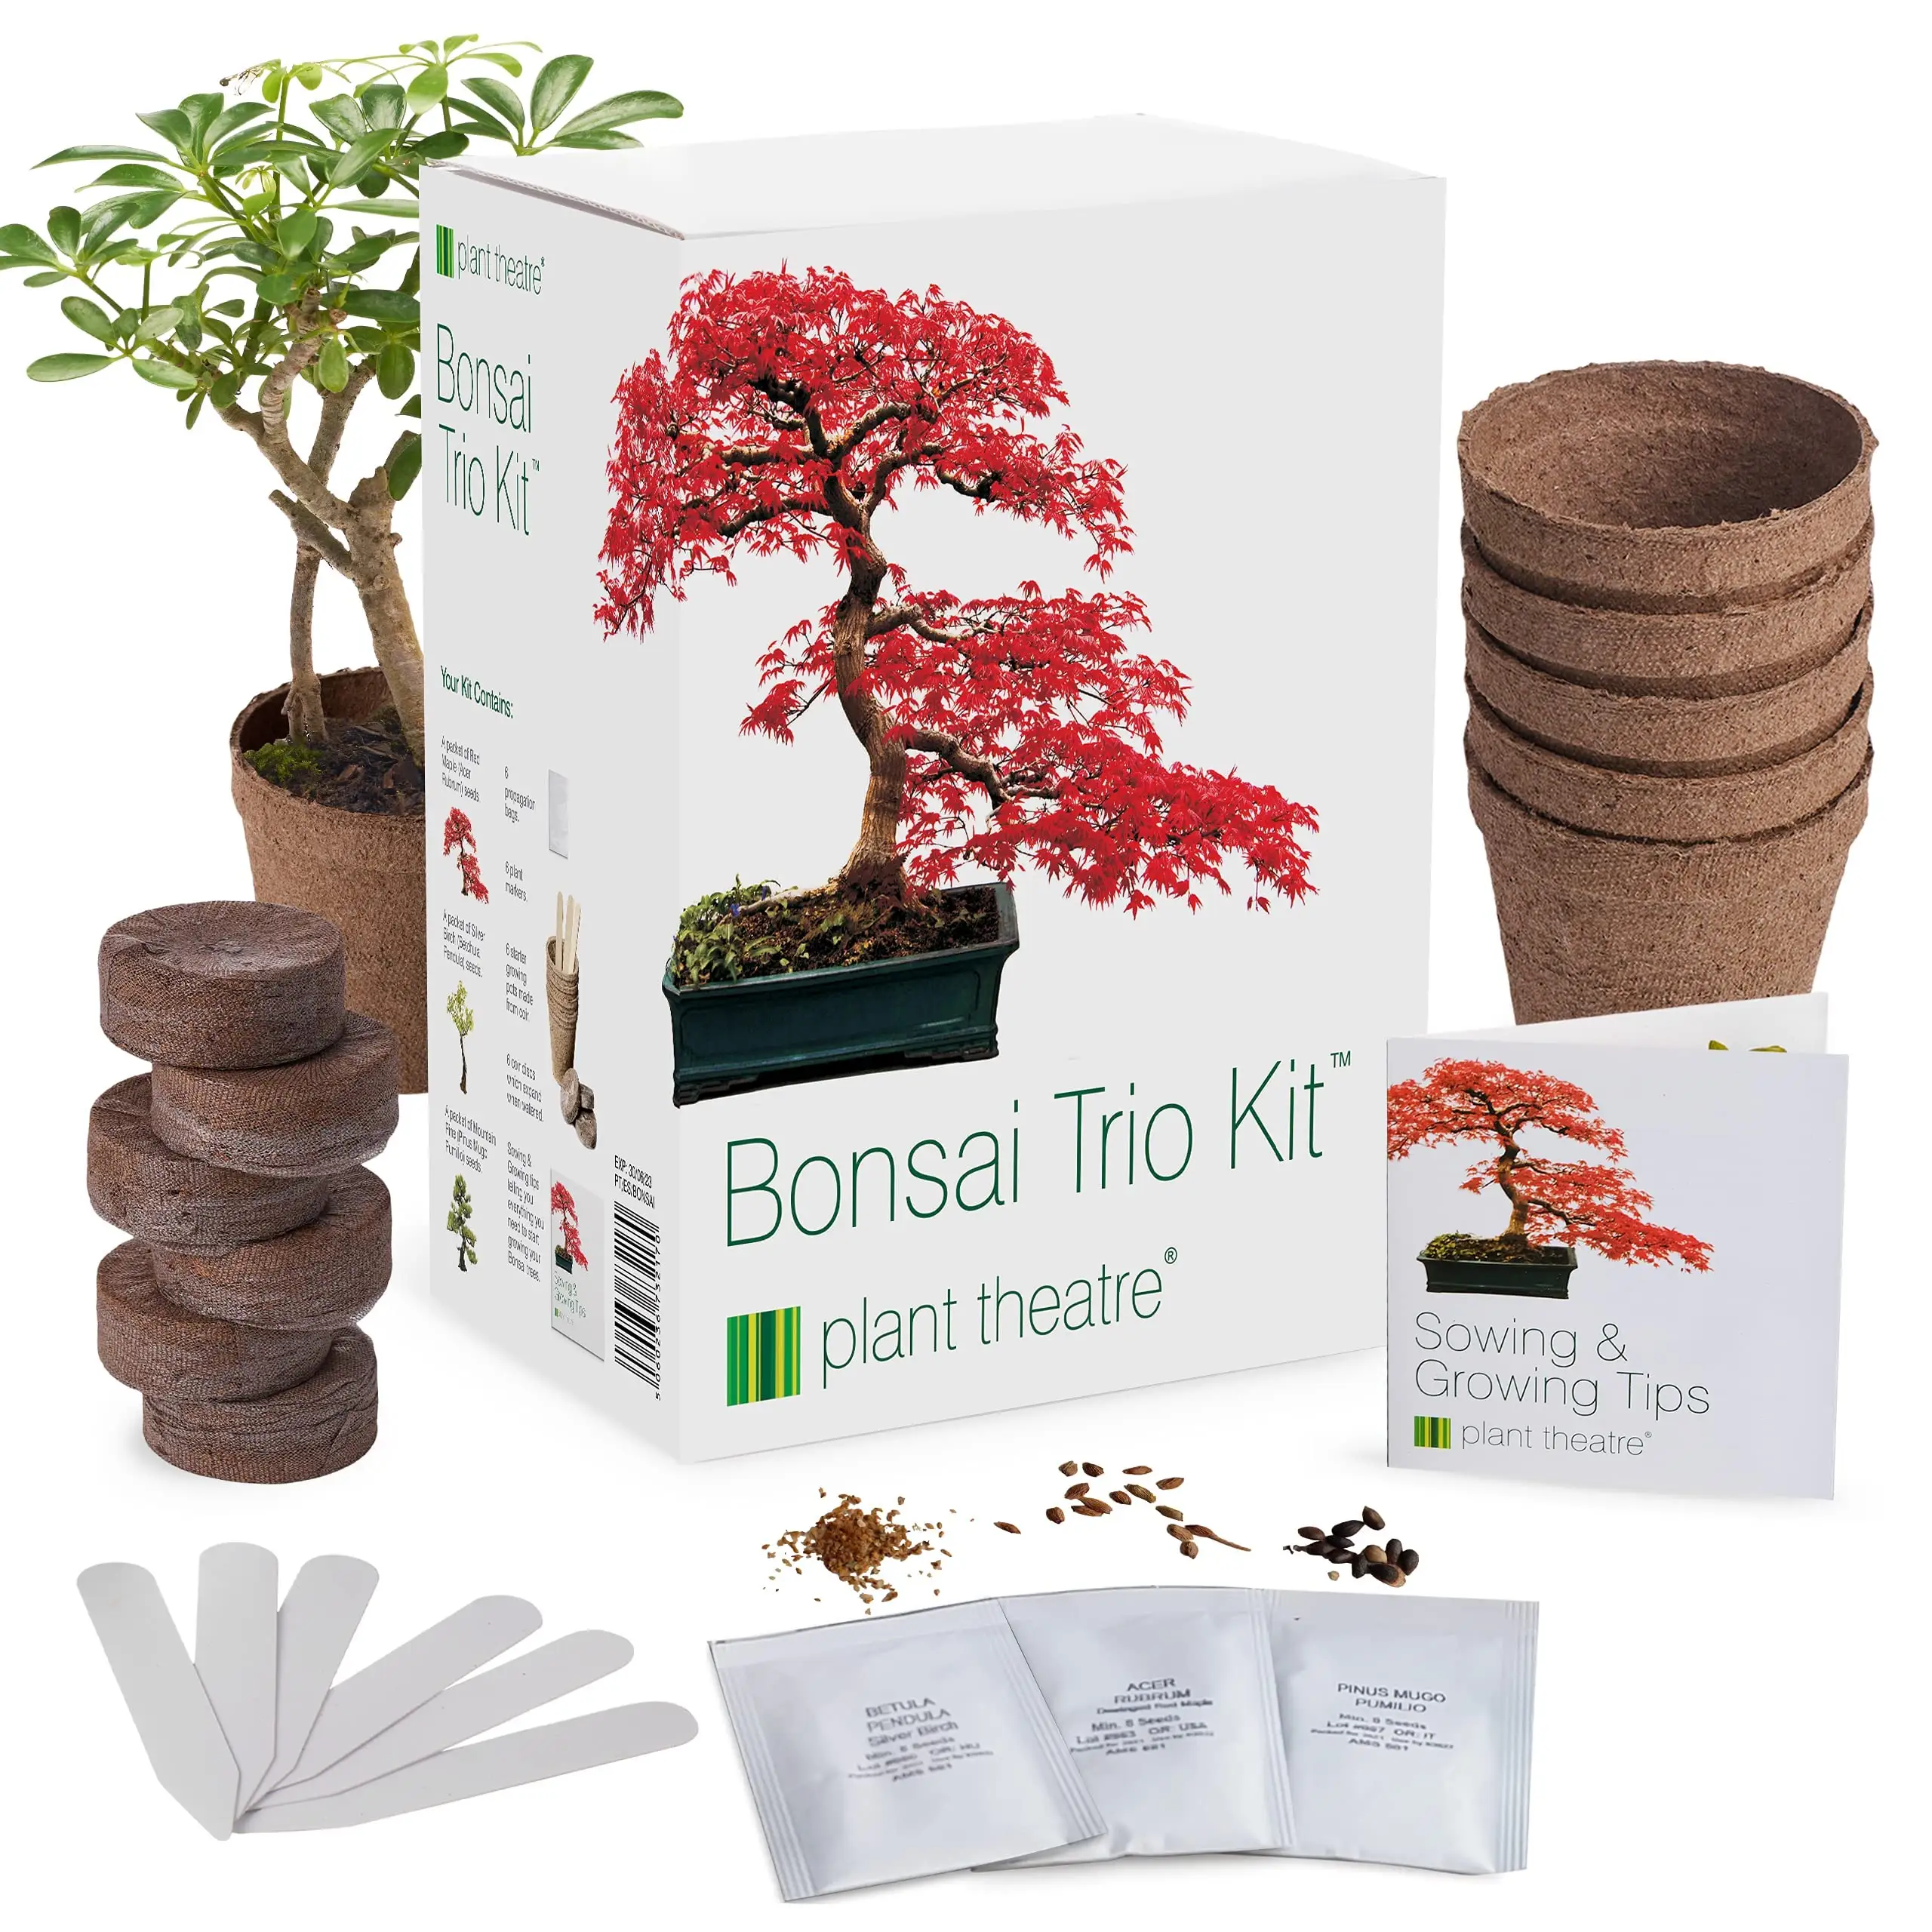 USDA Organic Certified Eco Friendly Indoor Home Garden Kit Bonsai Tree Starter Planting Kit For Kid